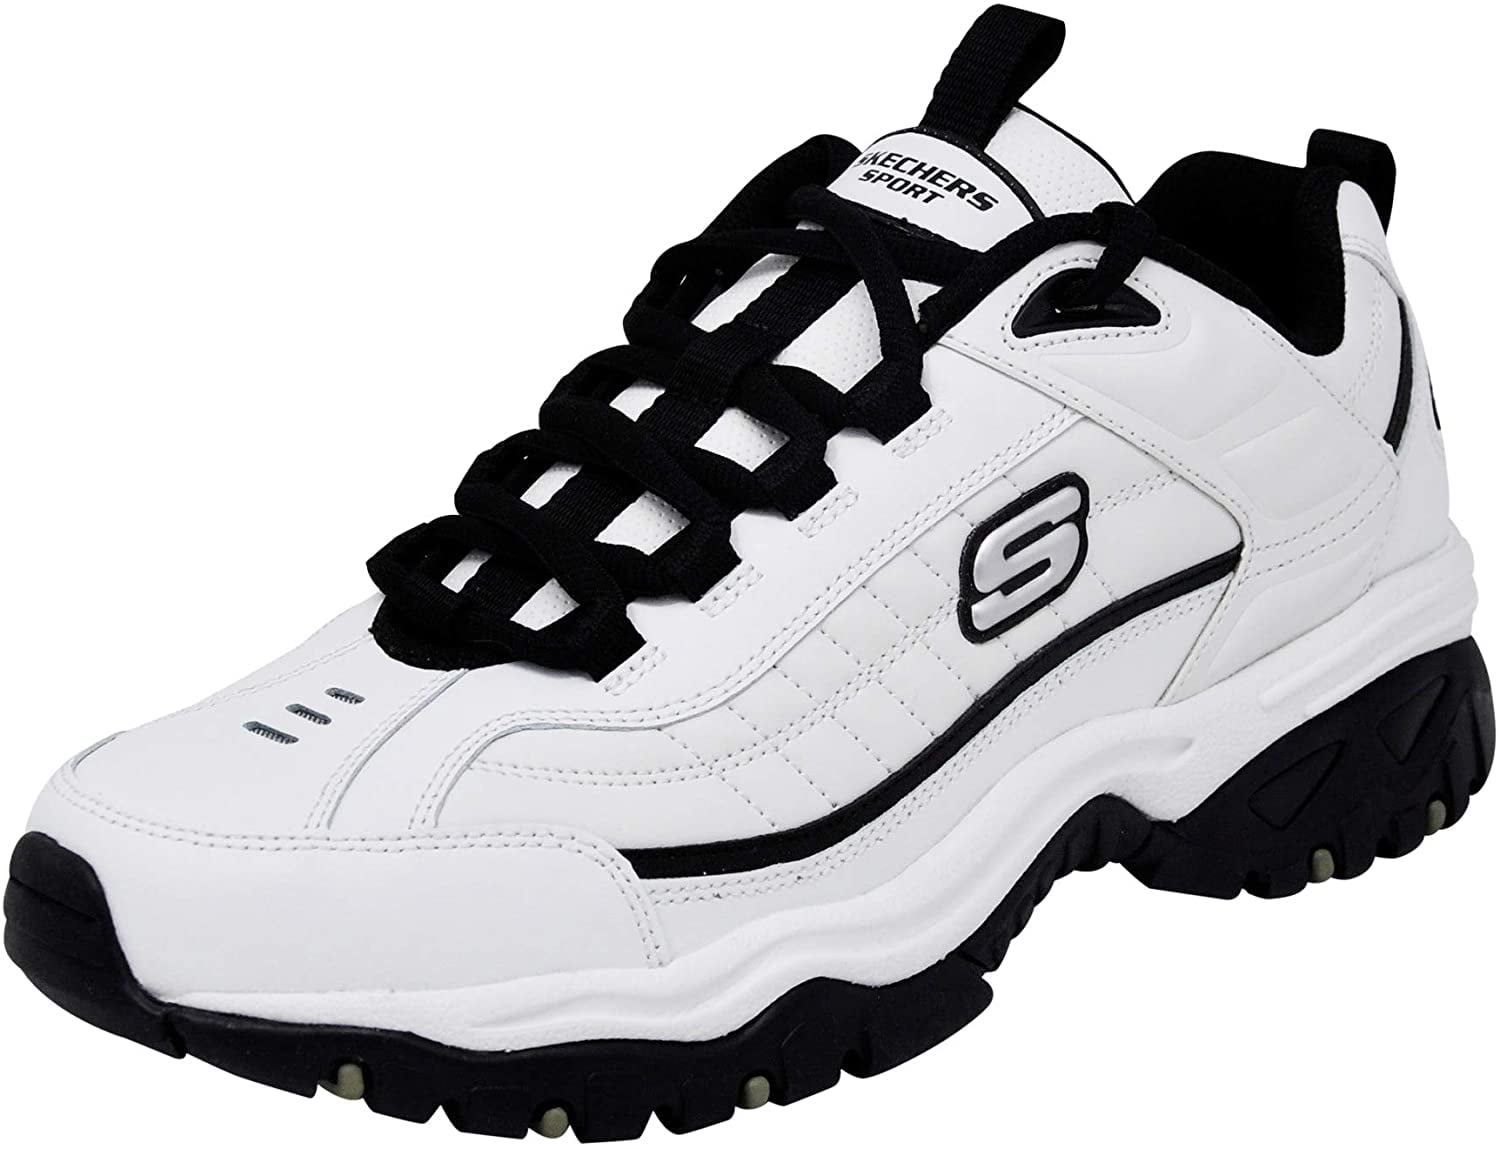 paso libro de bolsillo pronto Skechers Men's Energy Afterburn Lace-Up Sneaker, White/Black, 10.5 W US -  Walmart.com